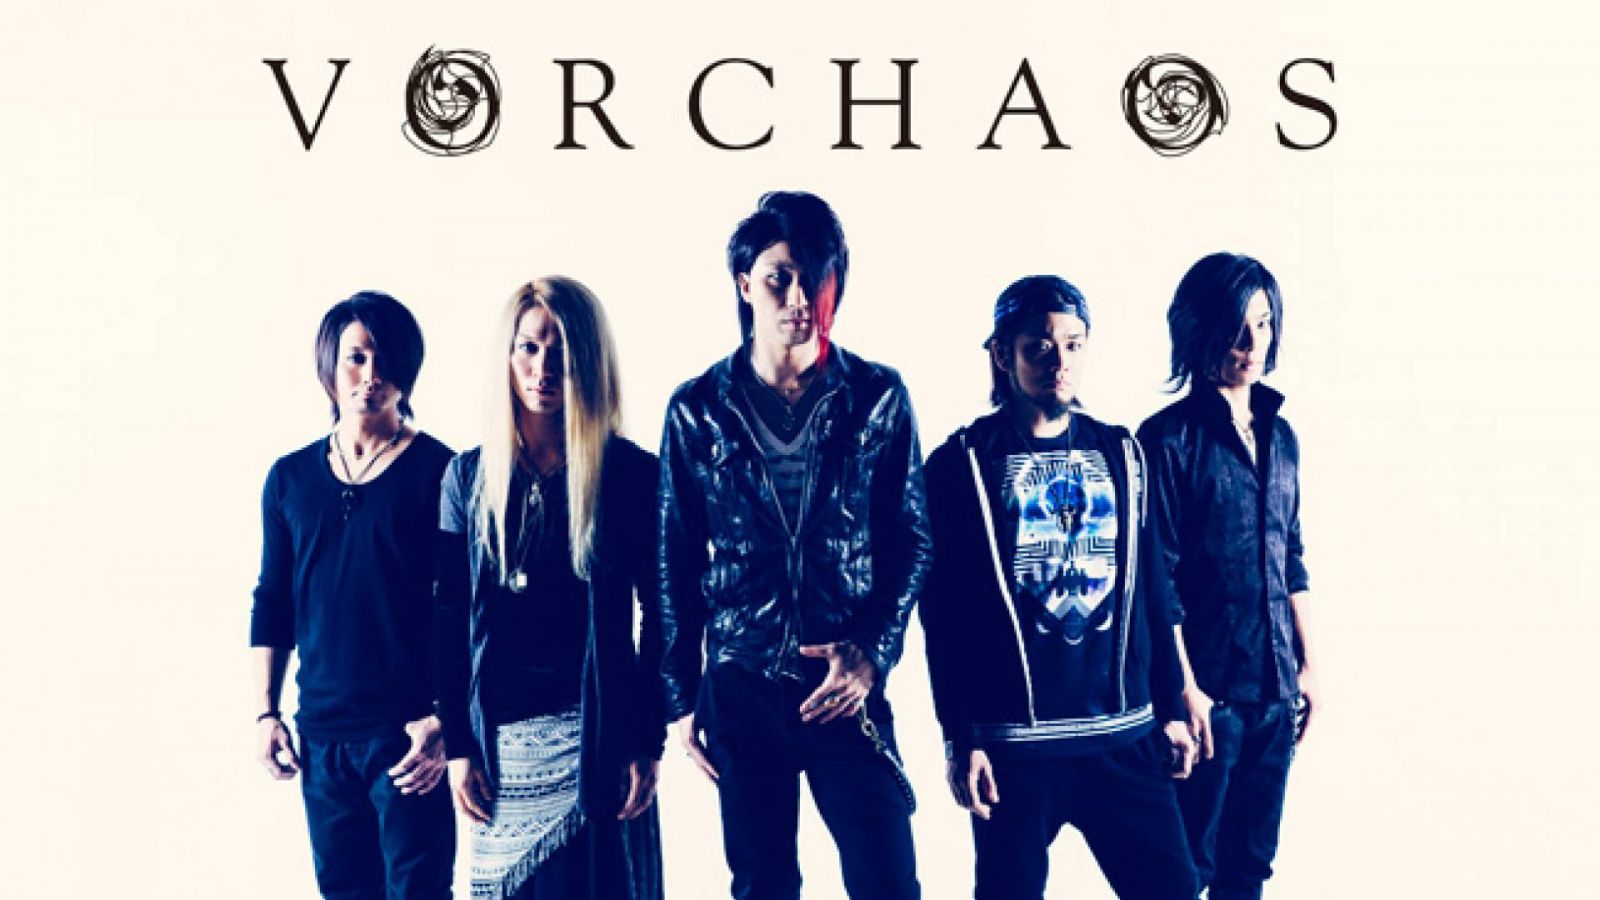 Novo single do Vorchaos © 2018 Vorchaos. Provided by A-Line Music.